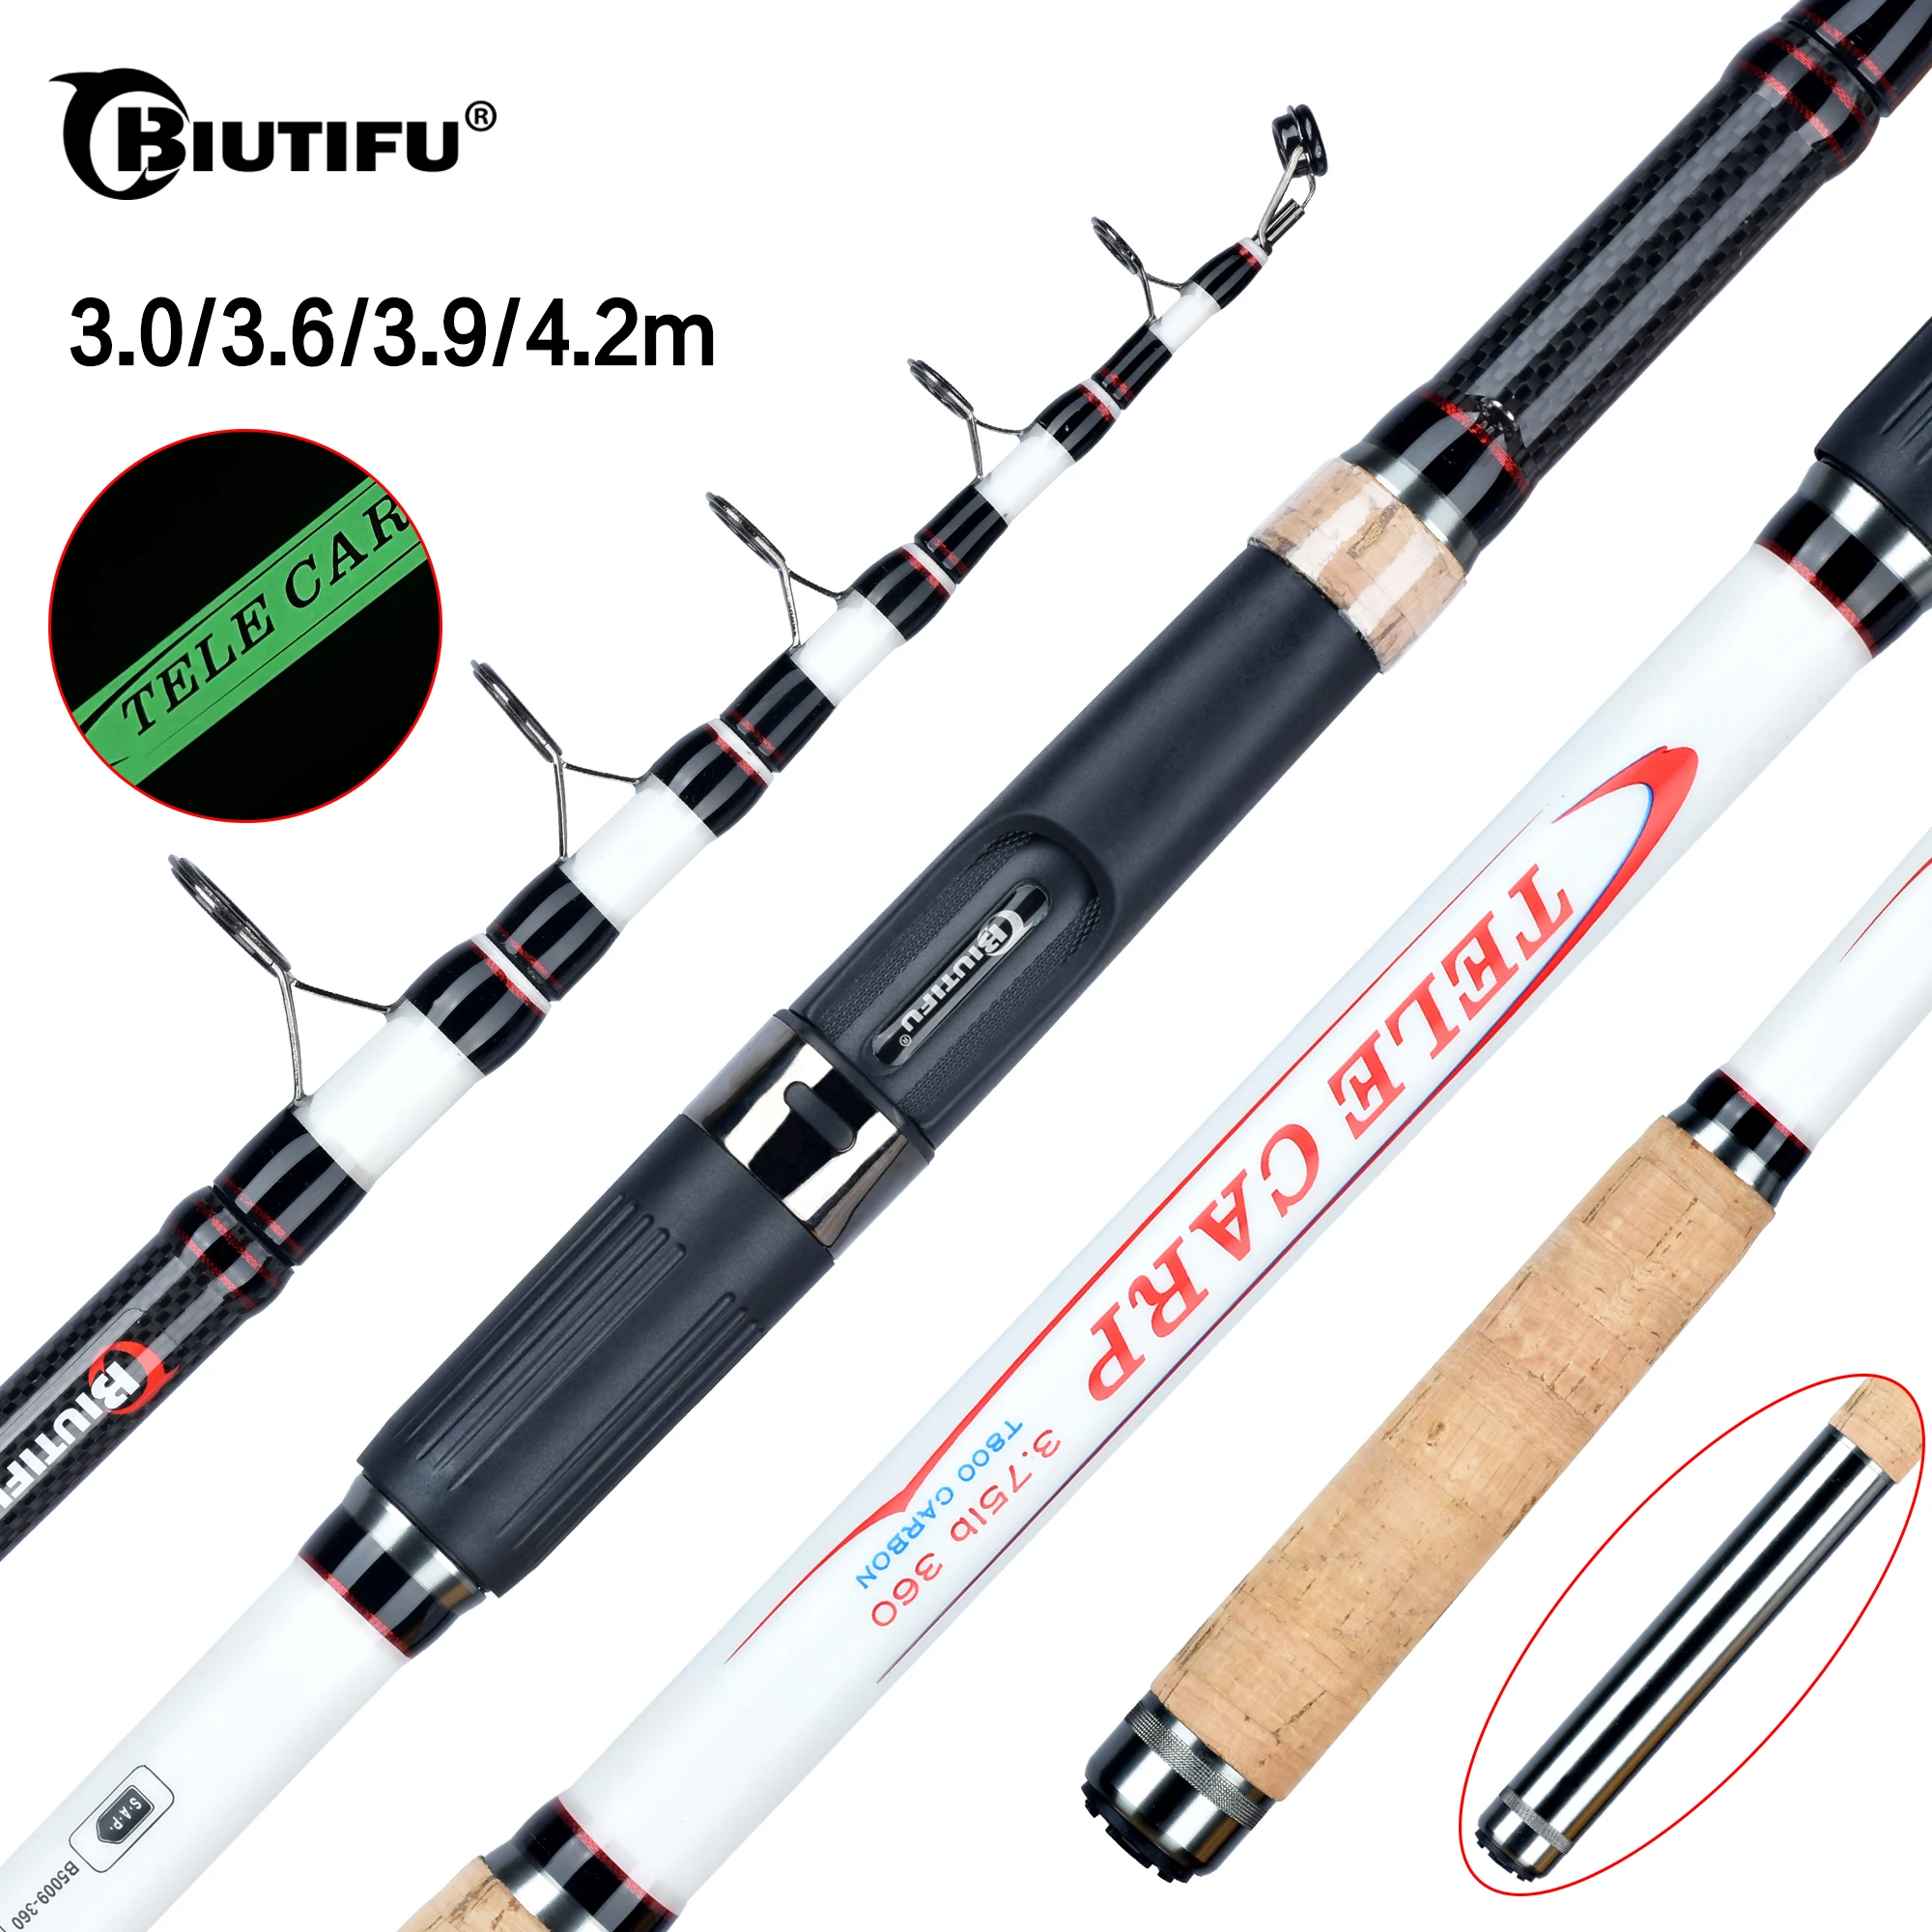 

BIUTIFU 3.75lbs Telescopic Carp Fishing Rods 3.0/3.6/3.9/4.2m T800 Carbon Travel Spinning Surfcasting 40-180g Lake Sea Hard Pole